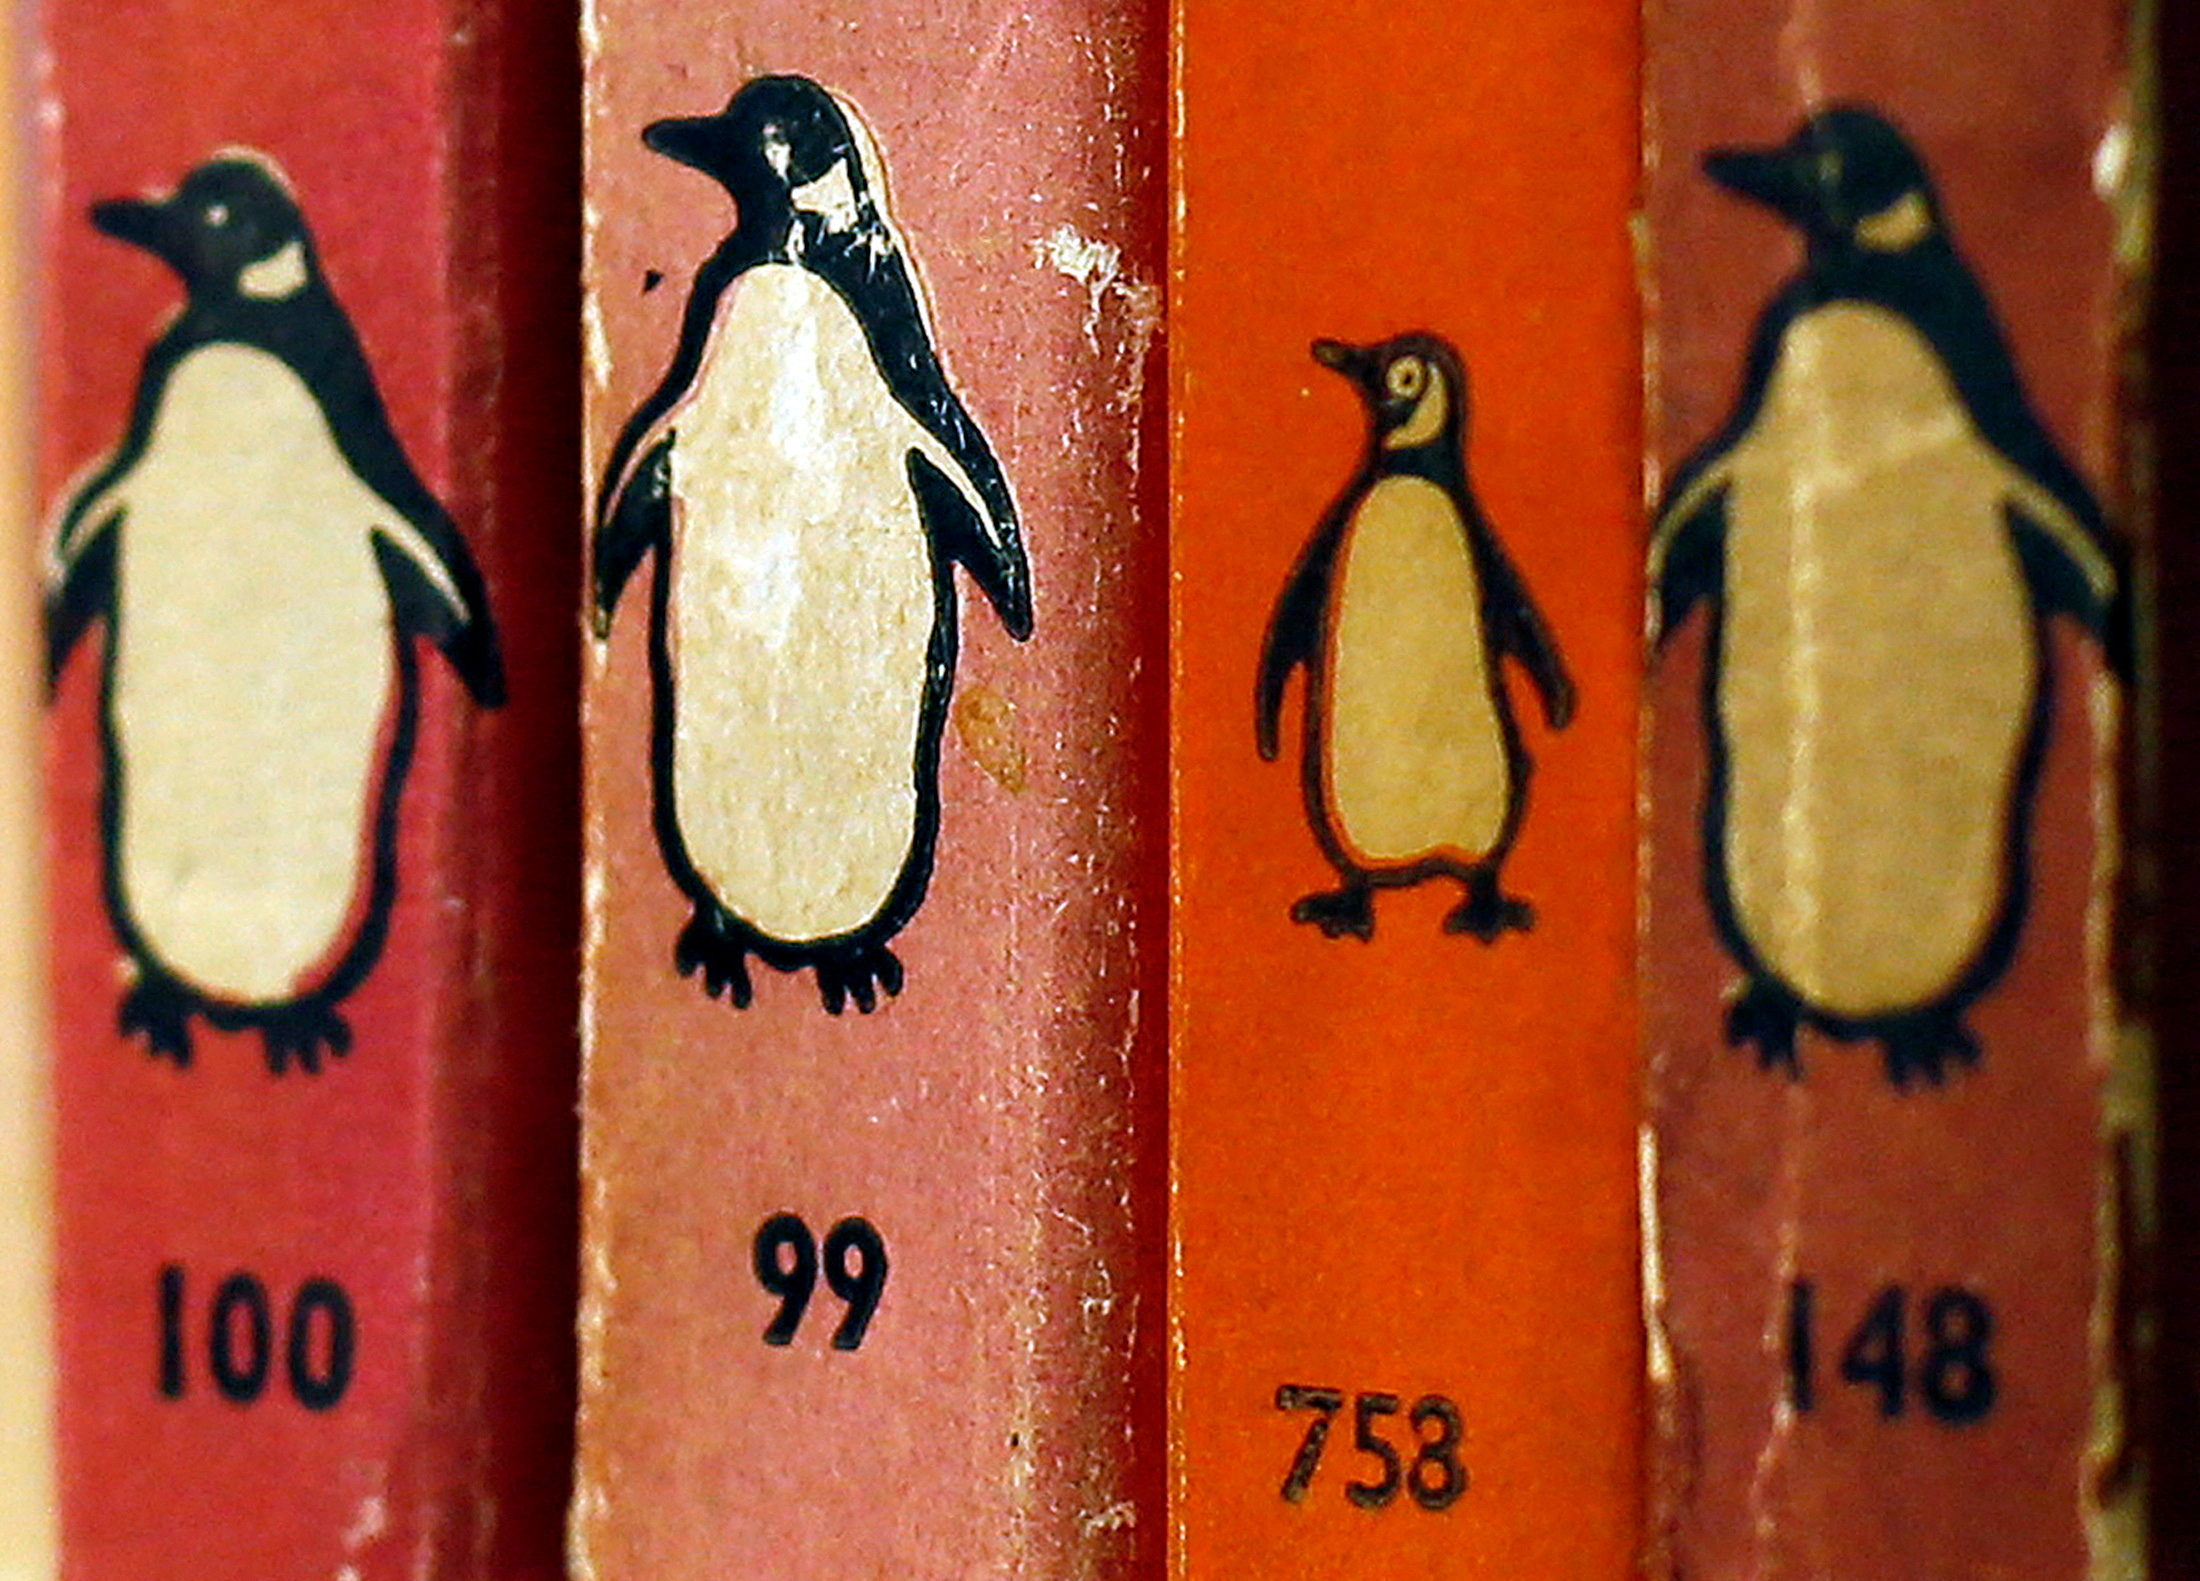 Penguin books (REUTERS/Stefan Wermuth)